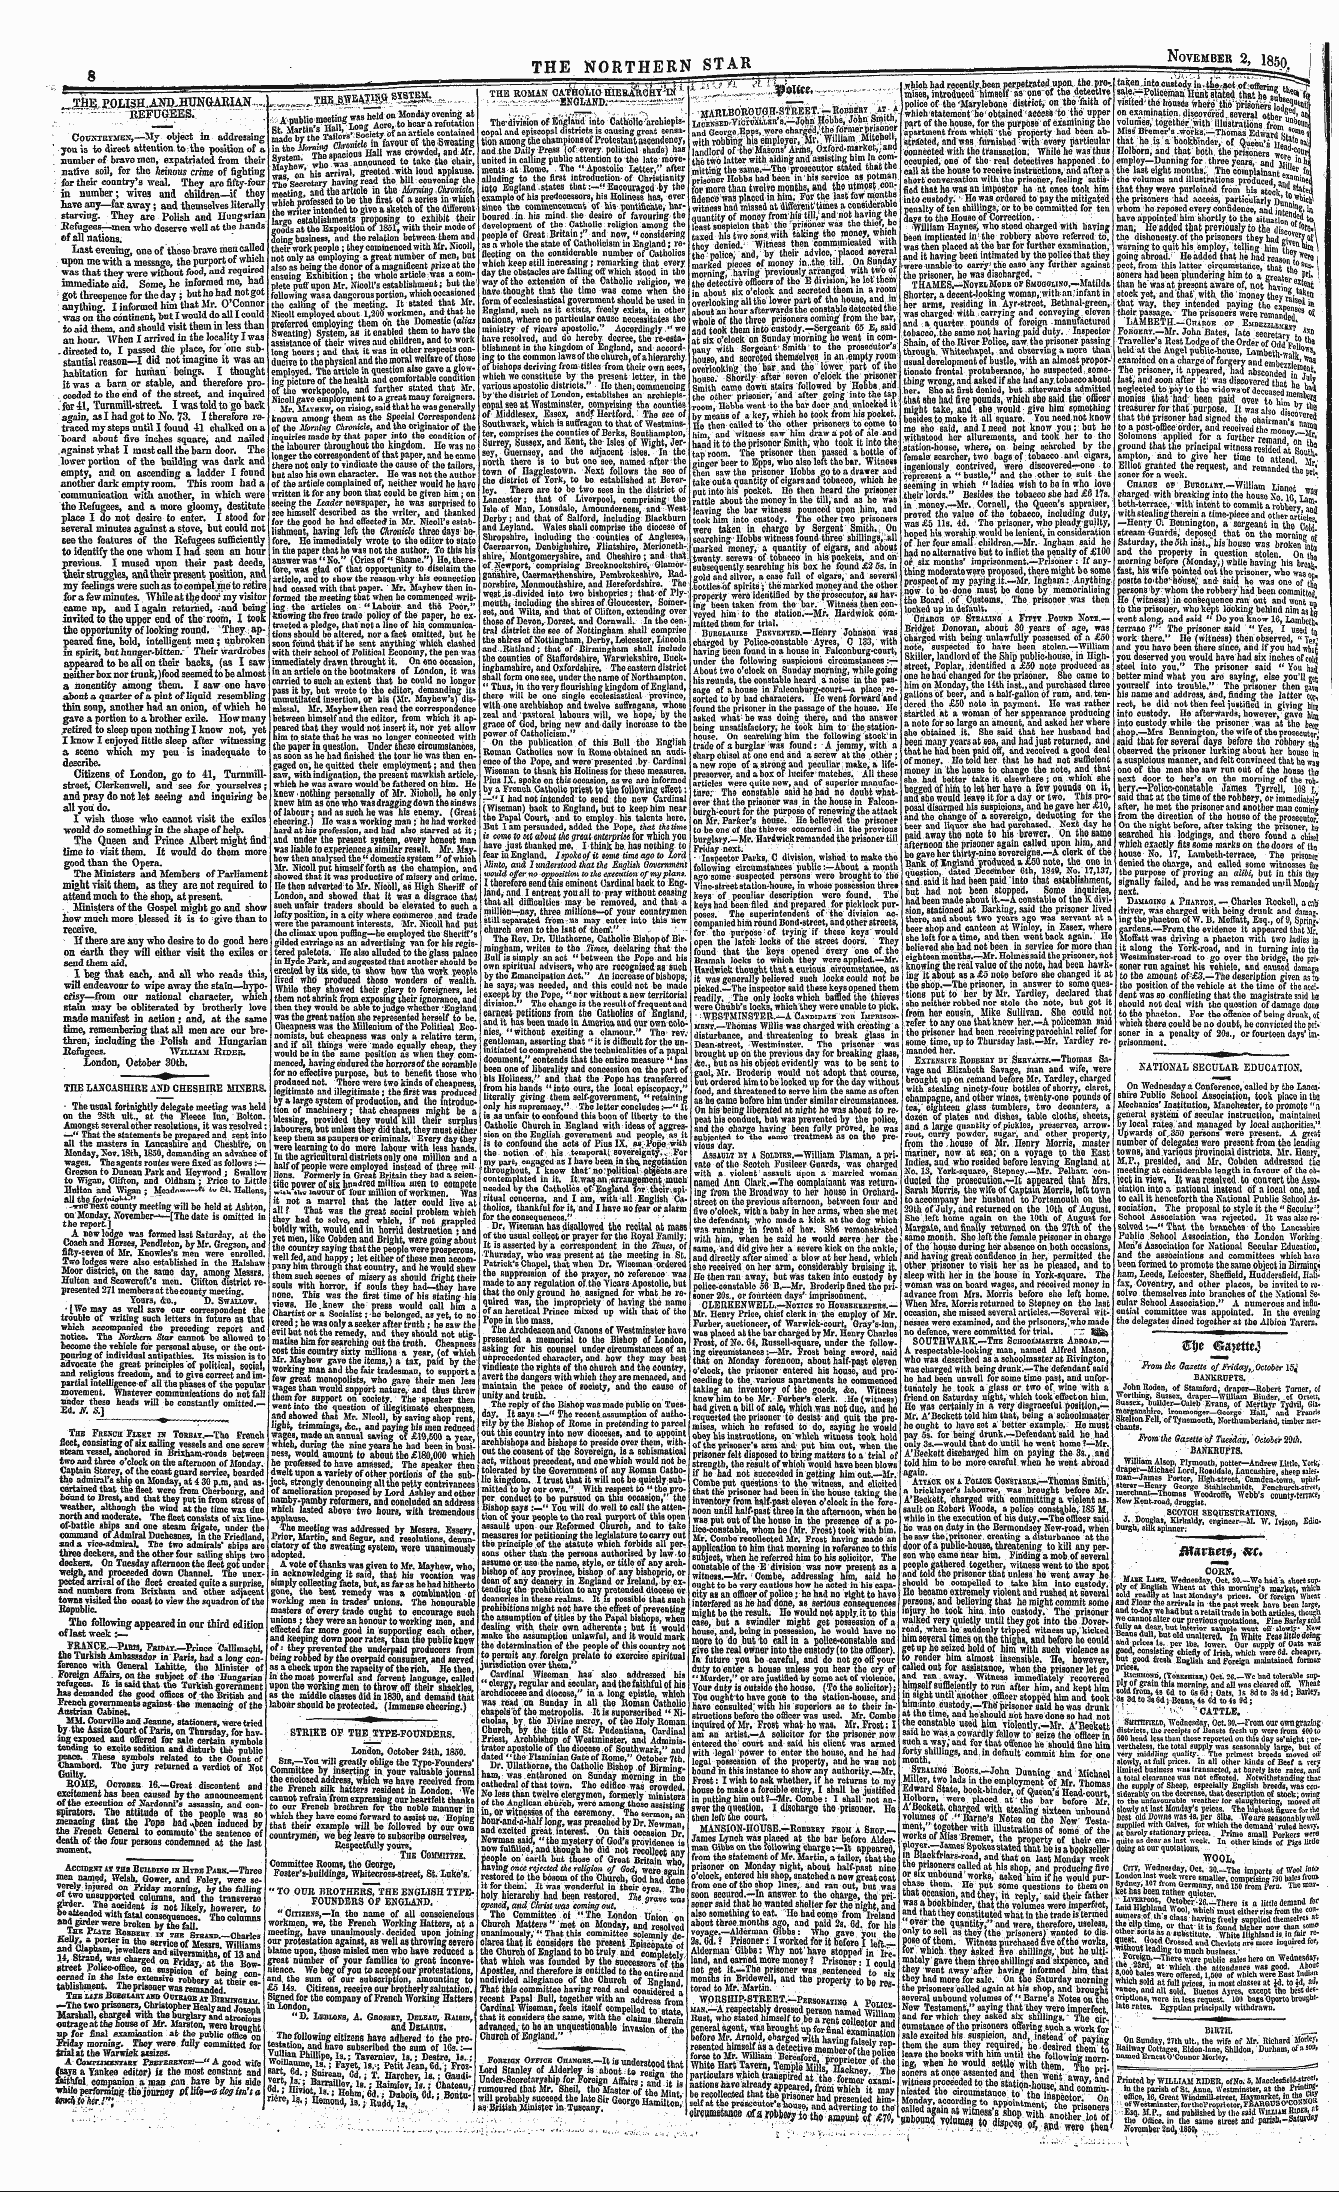 Northern Star (1837-1852): jS F Y, 2nd edition - Tfie Polish.Anb.Hungakun —- ~ --=- : -'R...